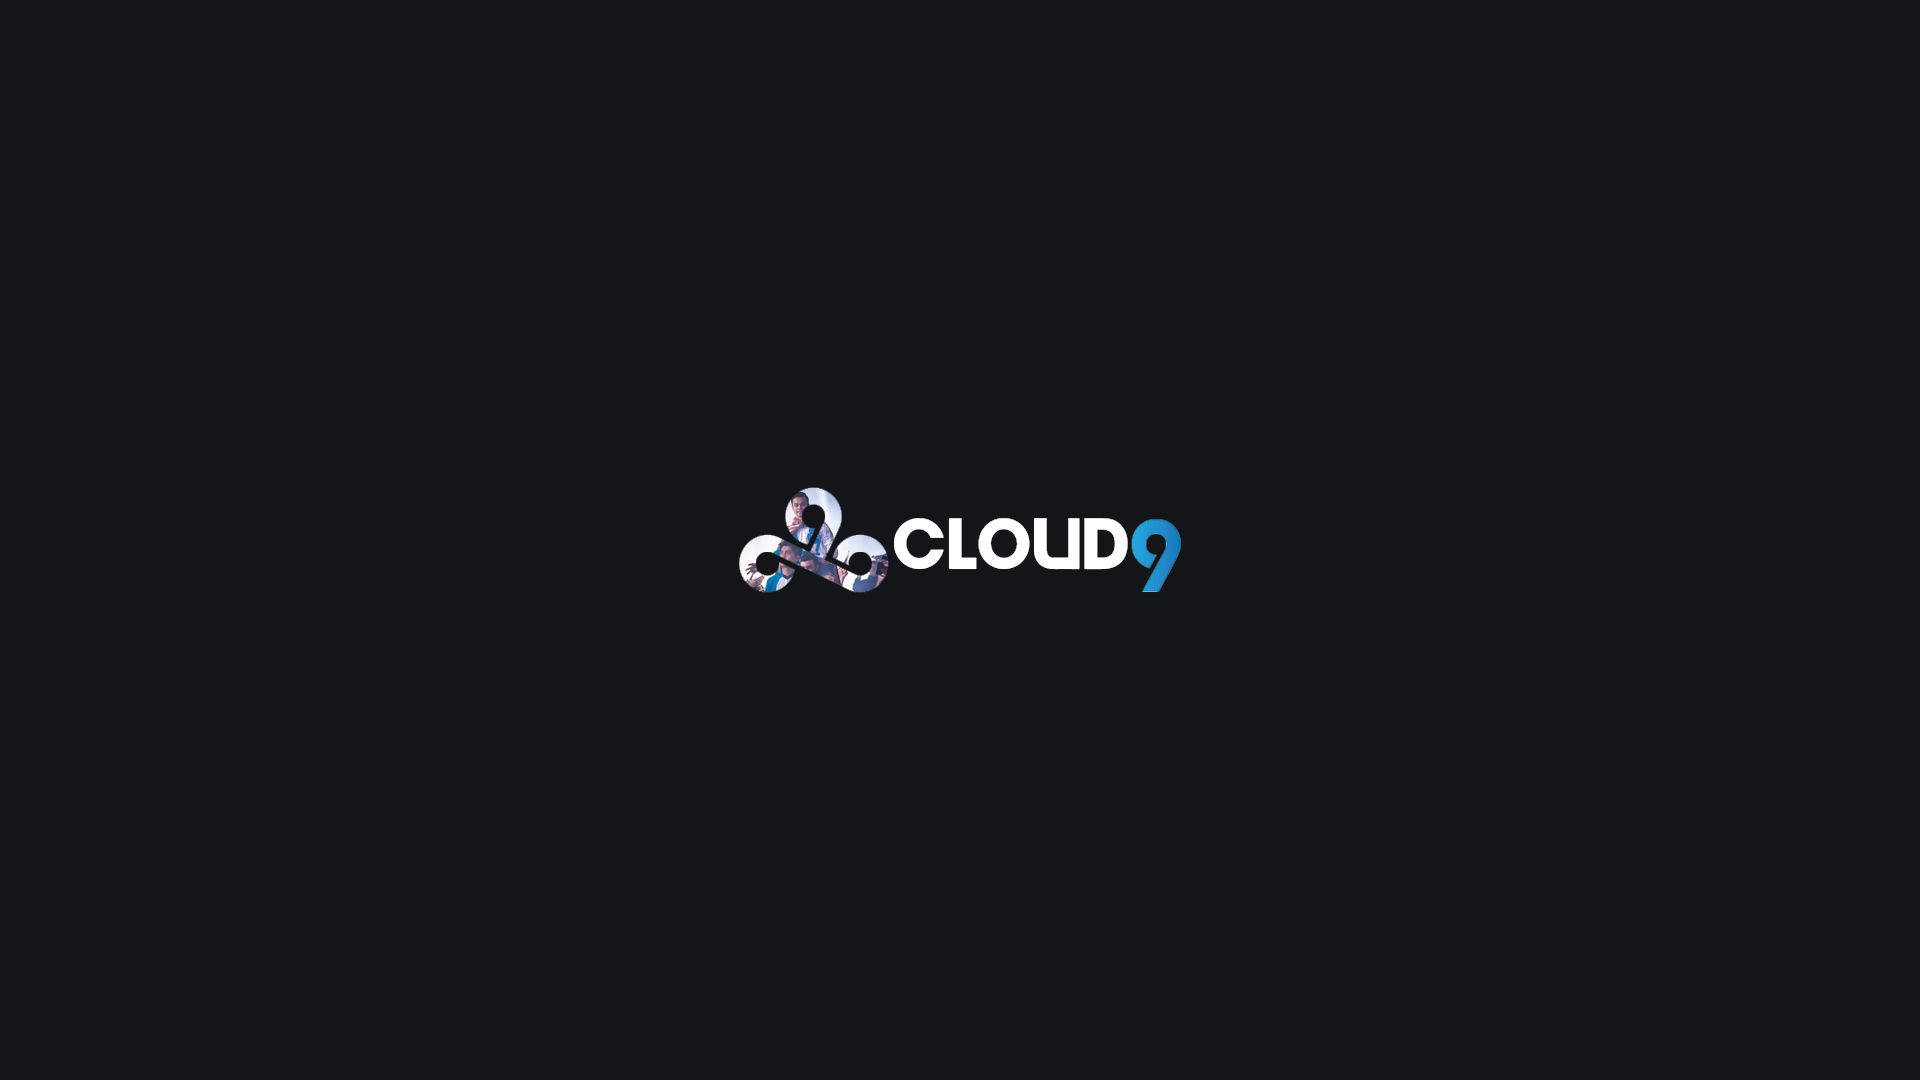 Simple Cloud9 Logo Background